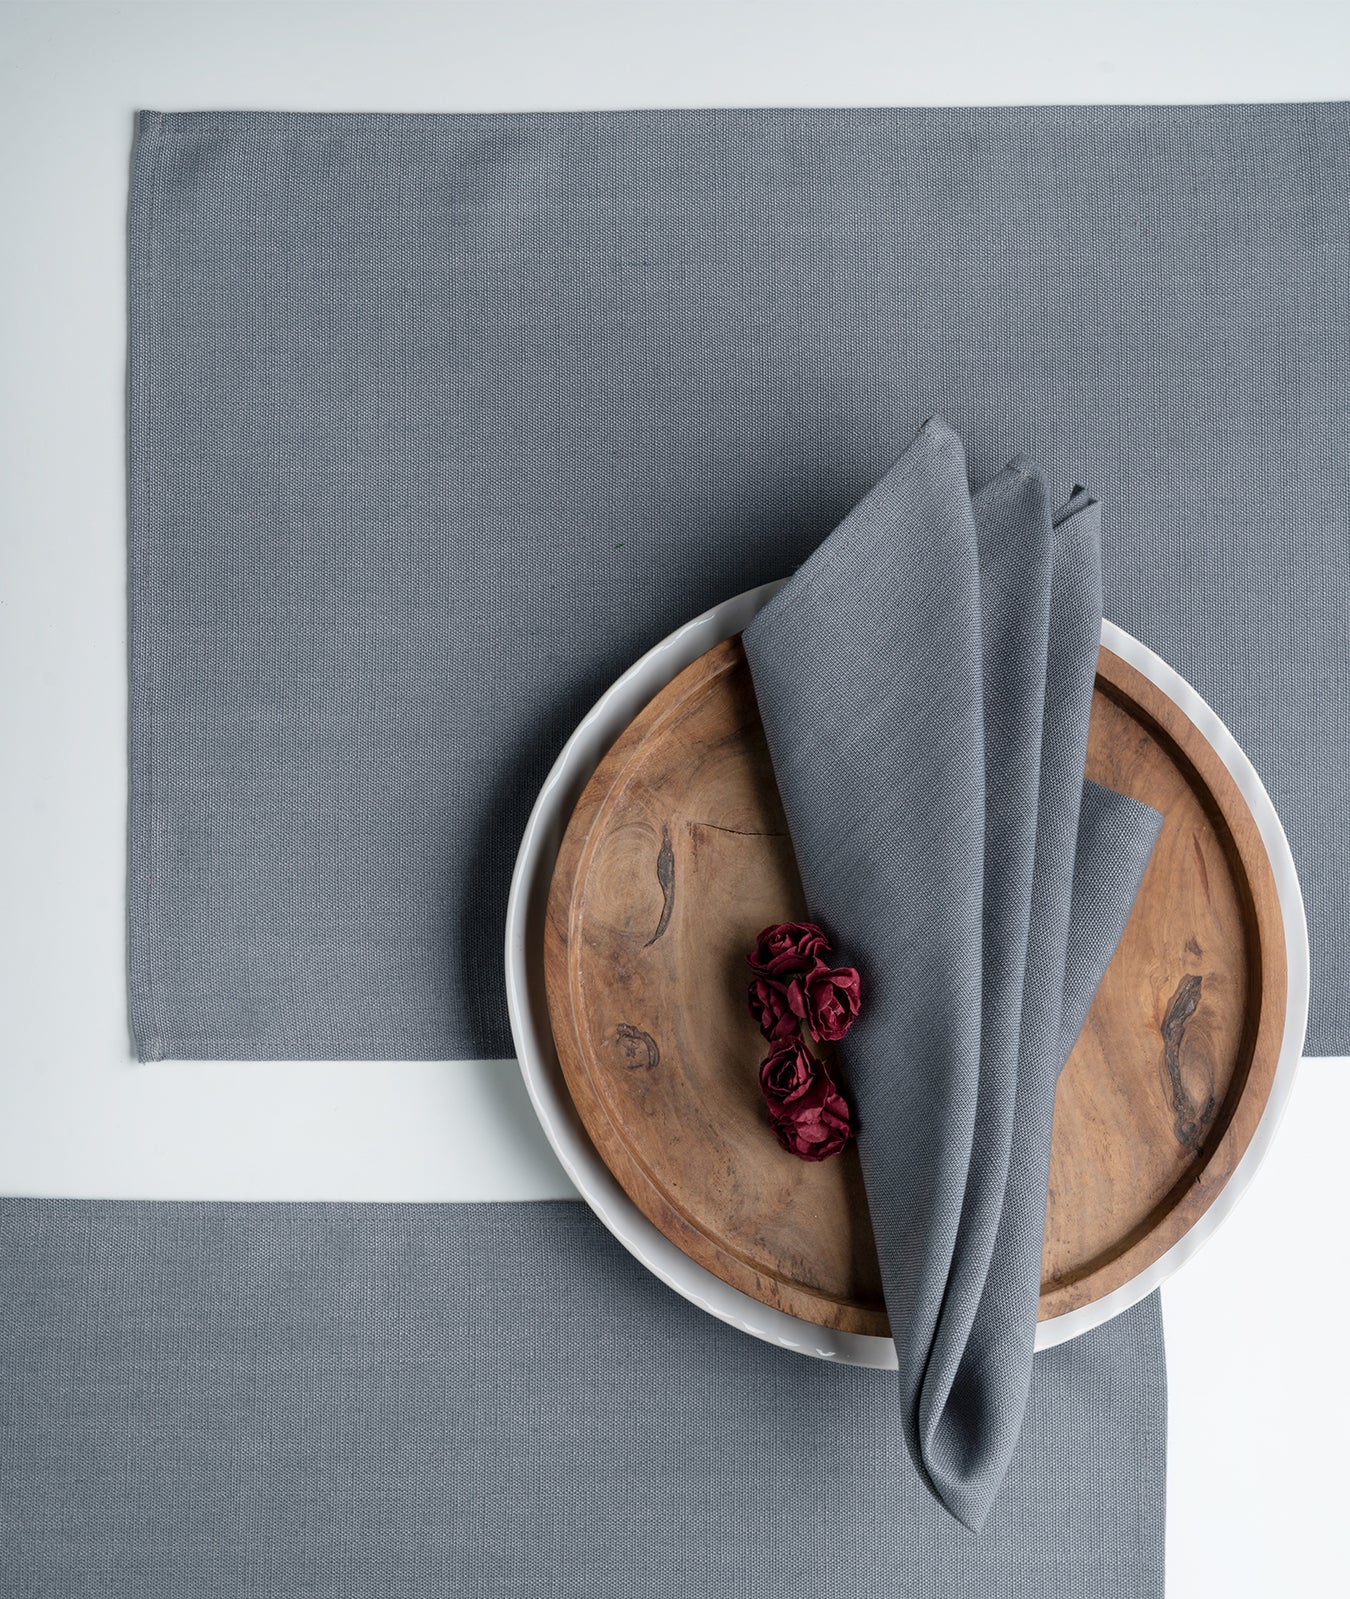 Charcoal Grey Linen Textured Dinner Napkins 20 x 20 Inch Set of 4 - Plain